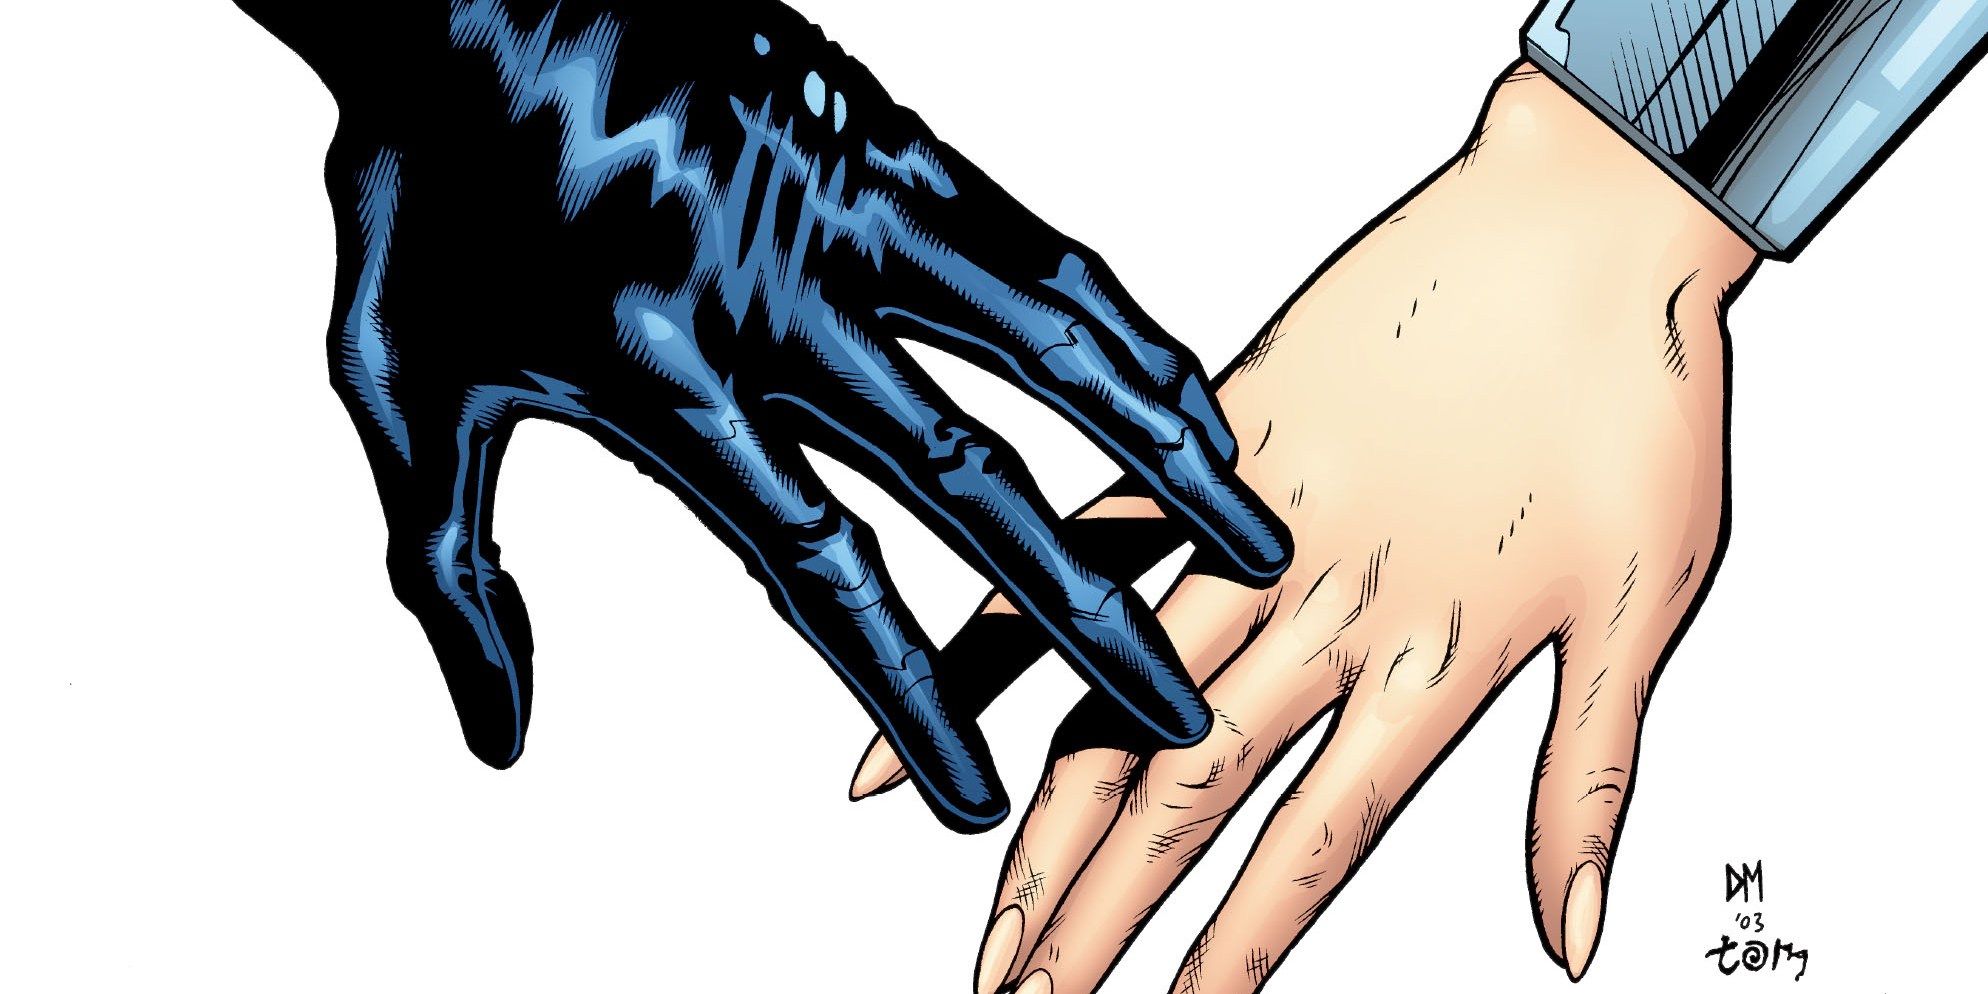 Batman's hand touches Wonder Woman's hand